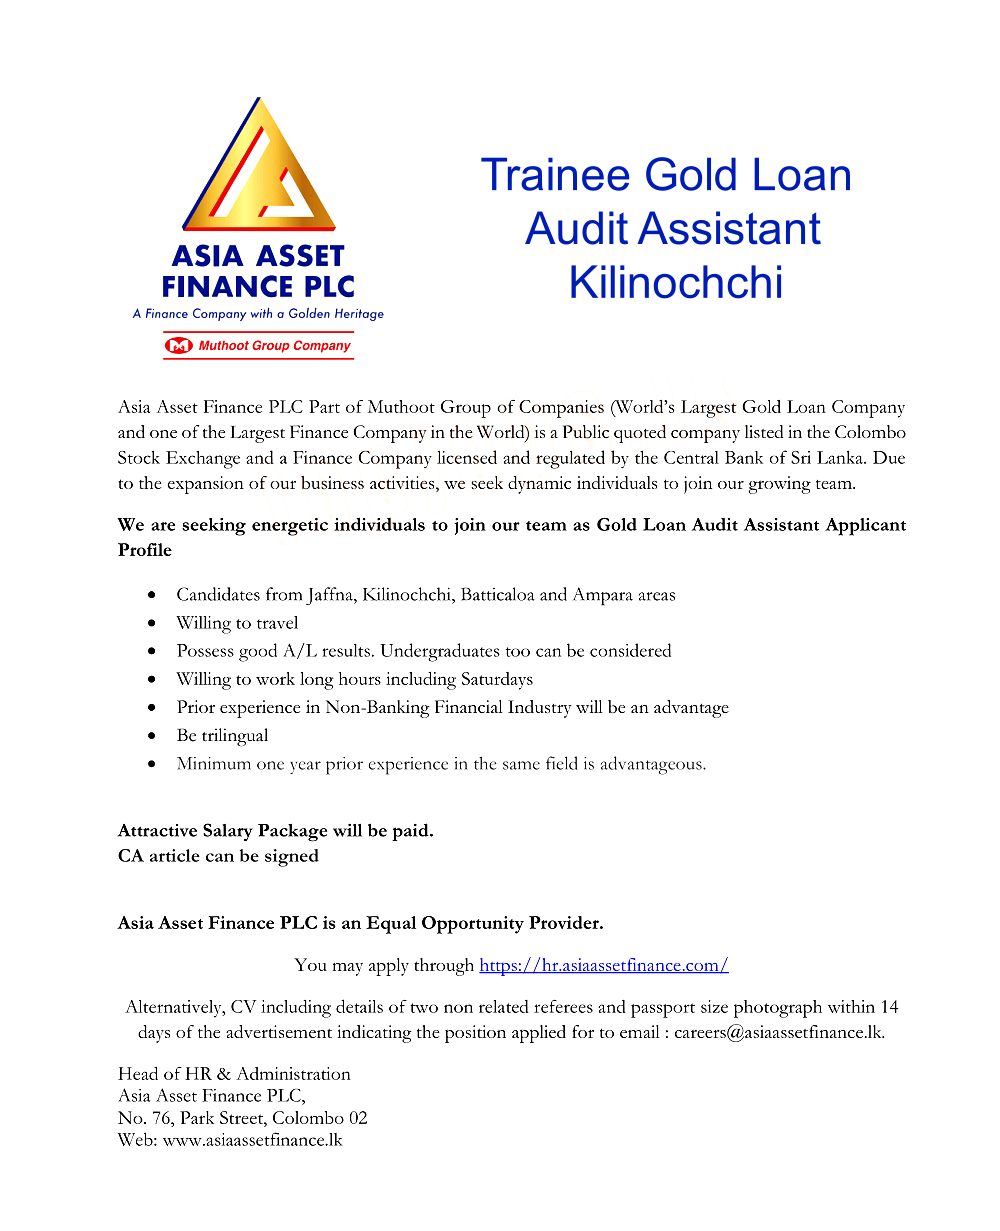 Trainee Gold Loan Audit Assistant Jobs - Kilinochchi Asia Asset Finance Vacancies Details